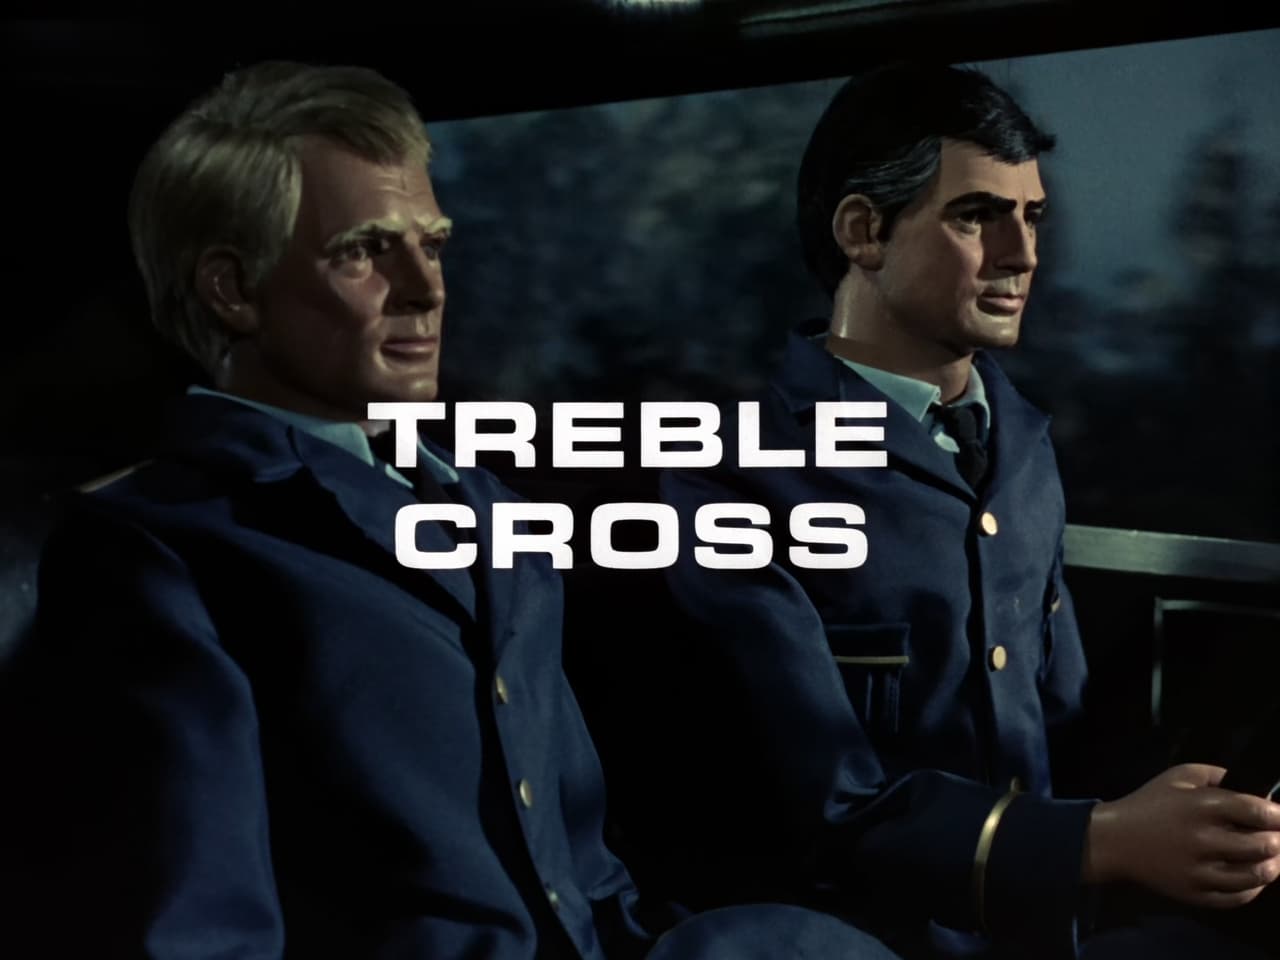 Treble Cross